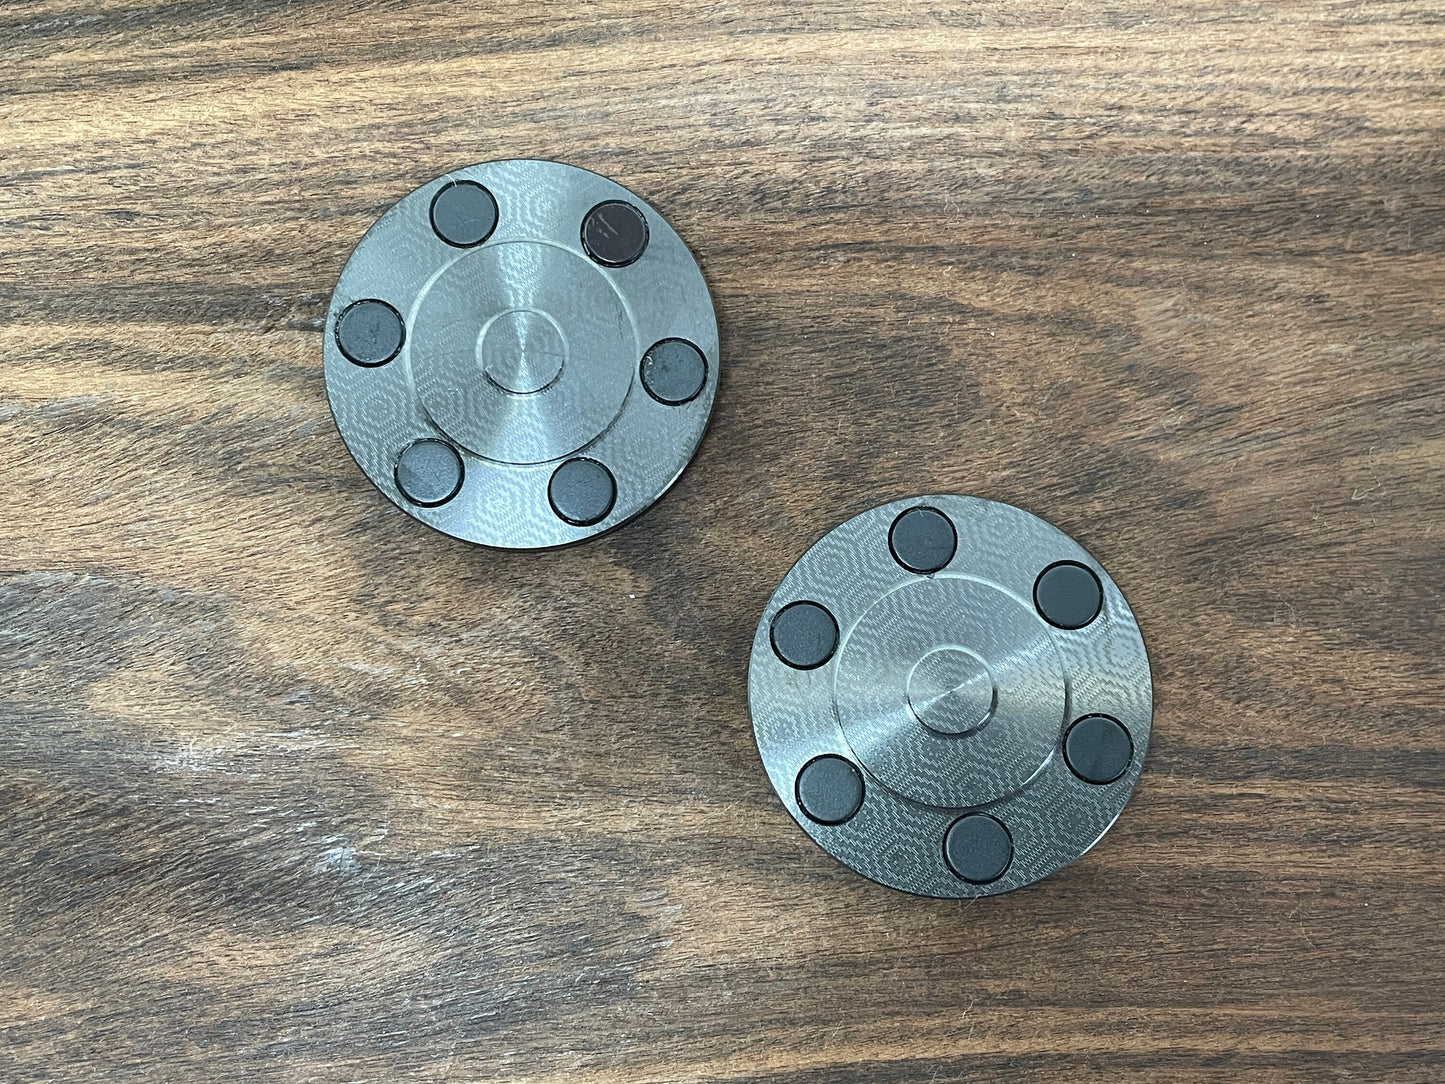 HAPTIC Coins CLICKY Black Zirconium Haptic Slider Fidget